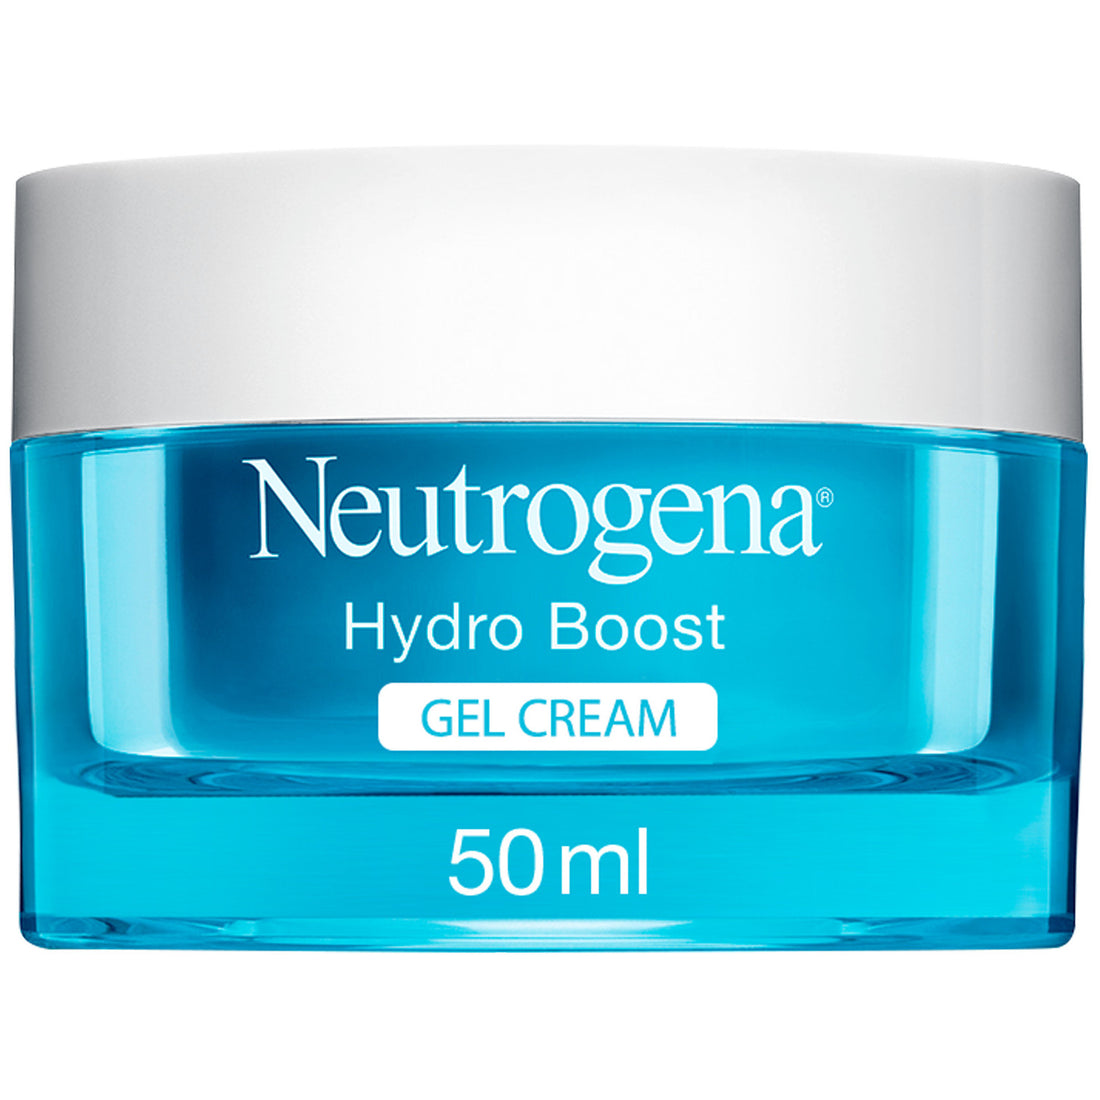 Neutrogena Hydro Boost Face Cream Gel 50ml